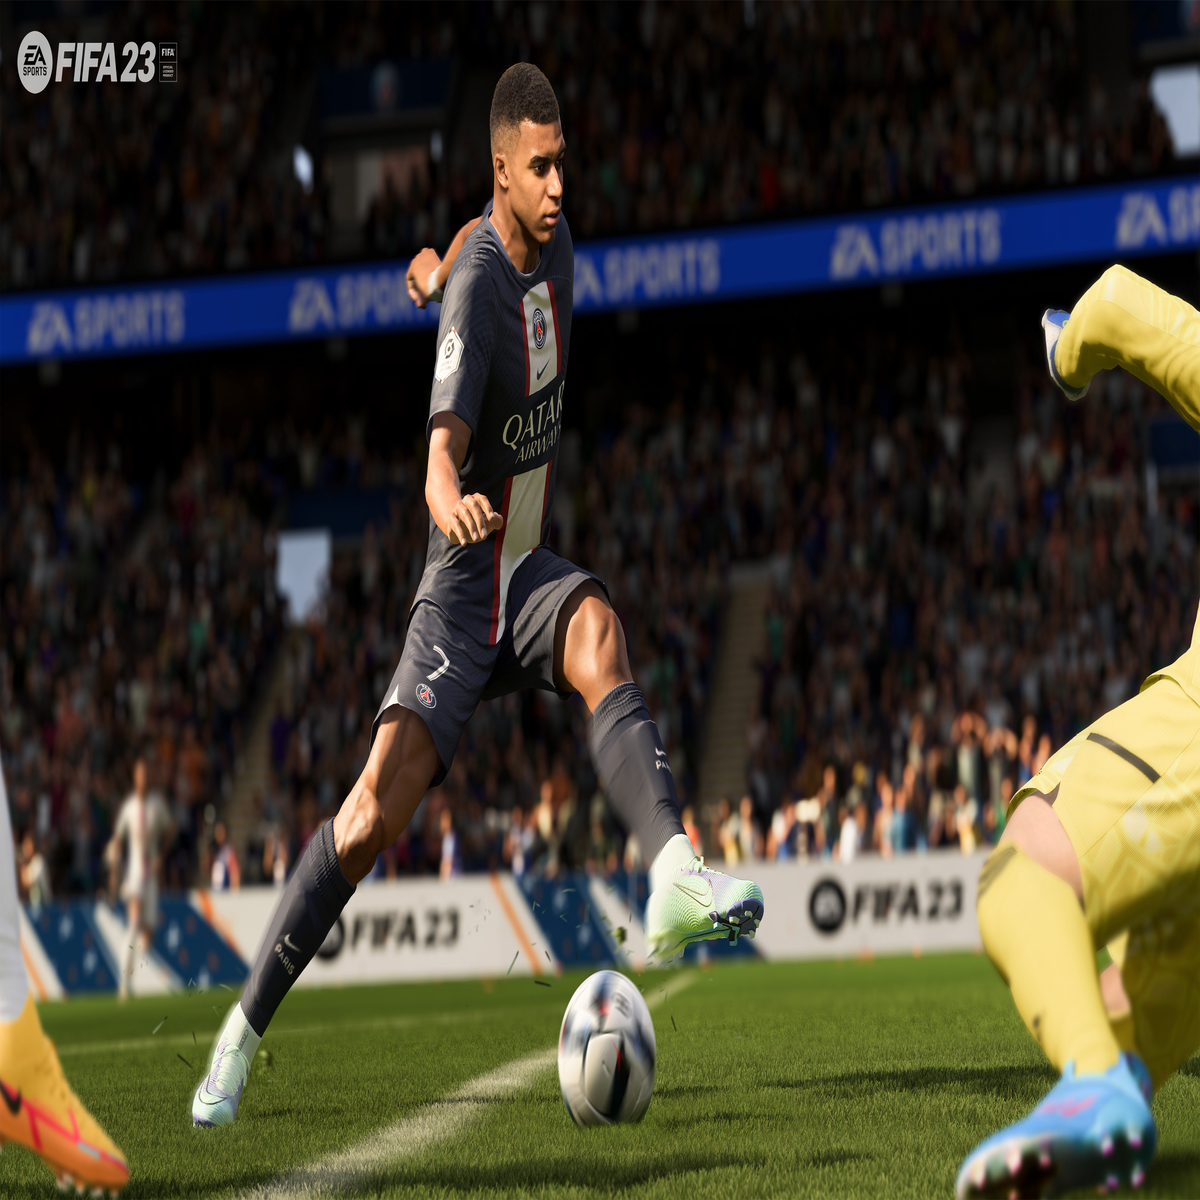 FIFA 23 - CONVIDAR AMIGOS PARA JOGAR ONLINE , ATIVAR O CROSSPLAY